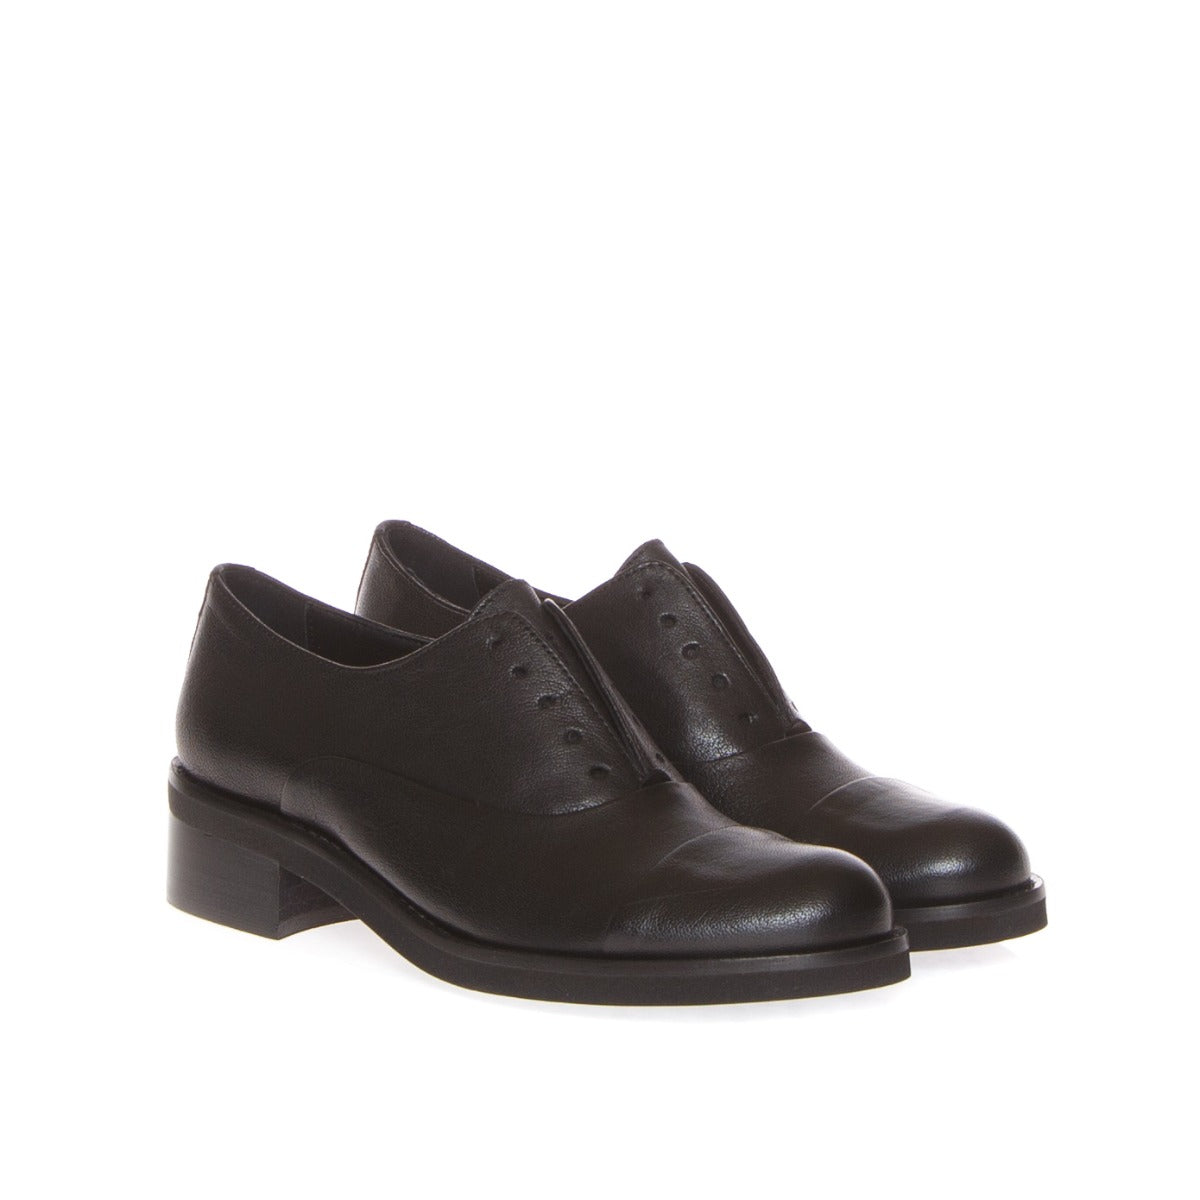 mat20-slip-on-donna-1700-west-pelle-nero-calzature